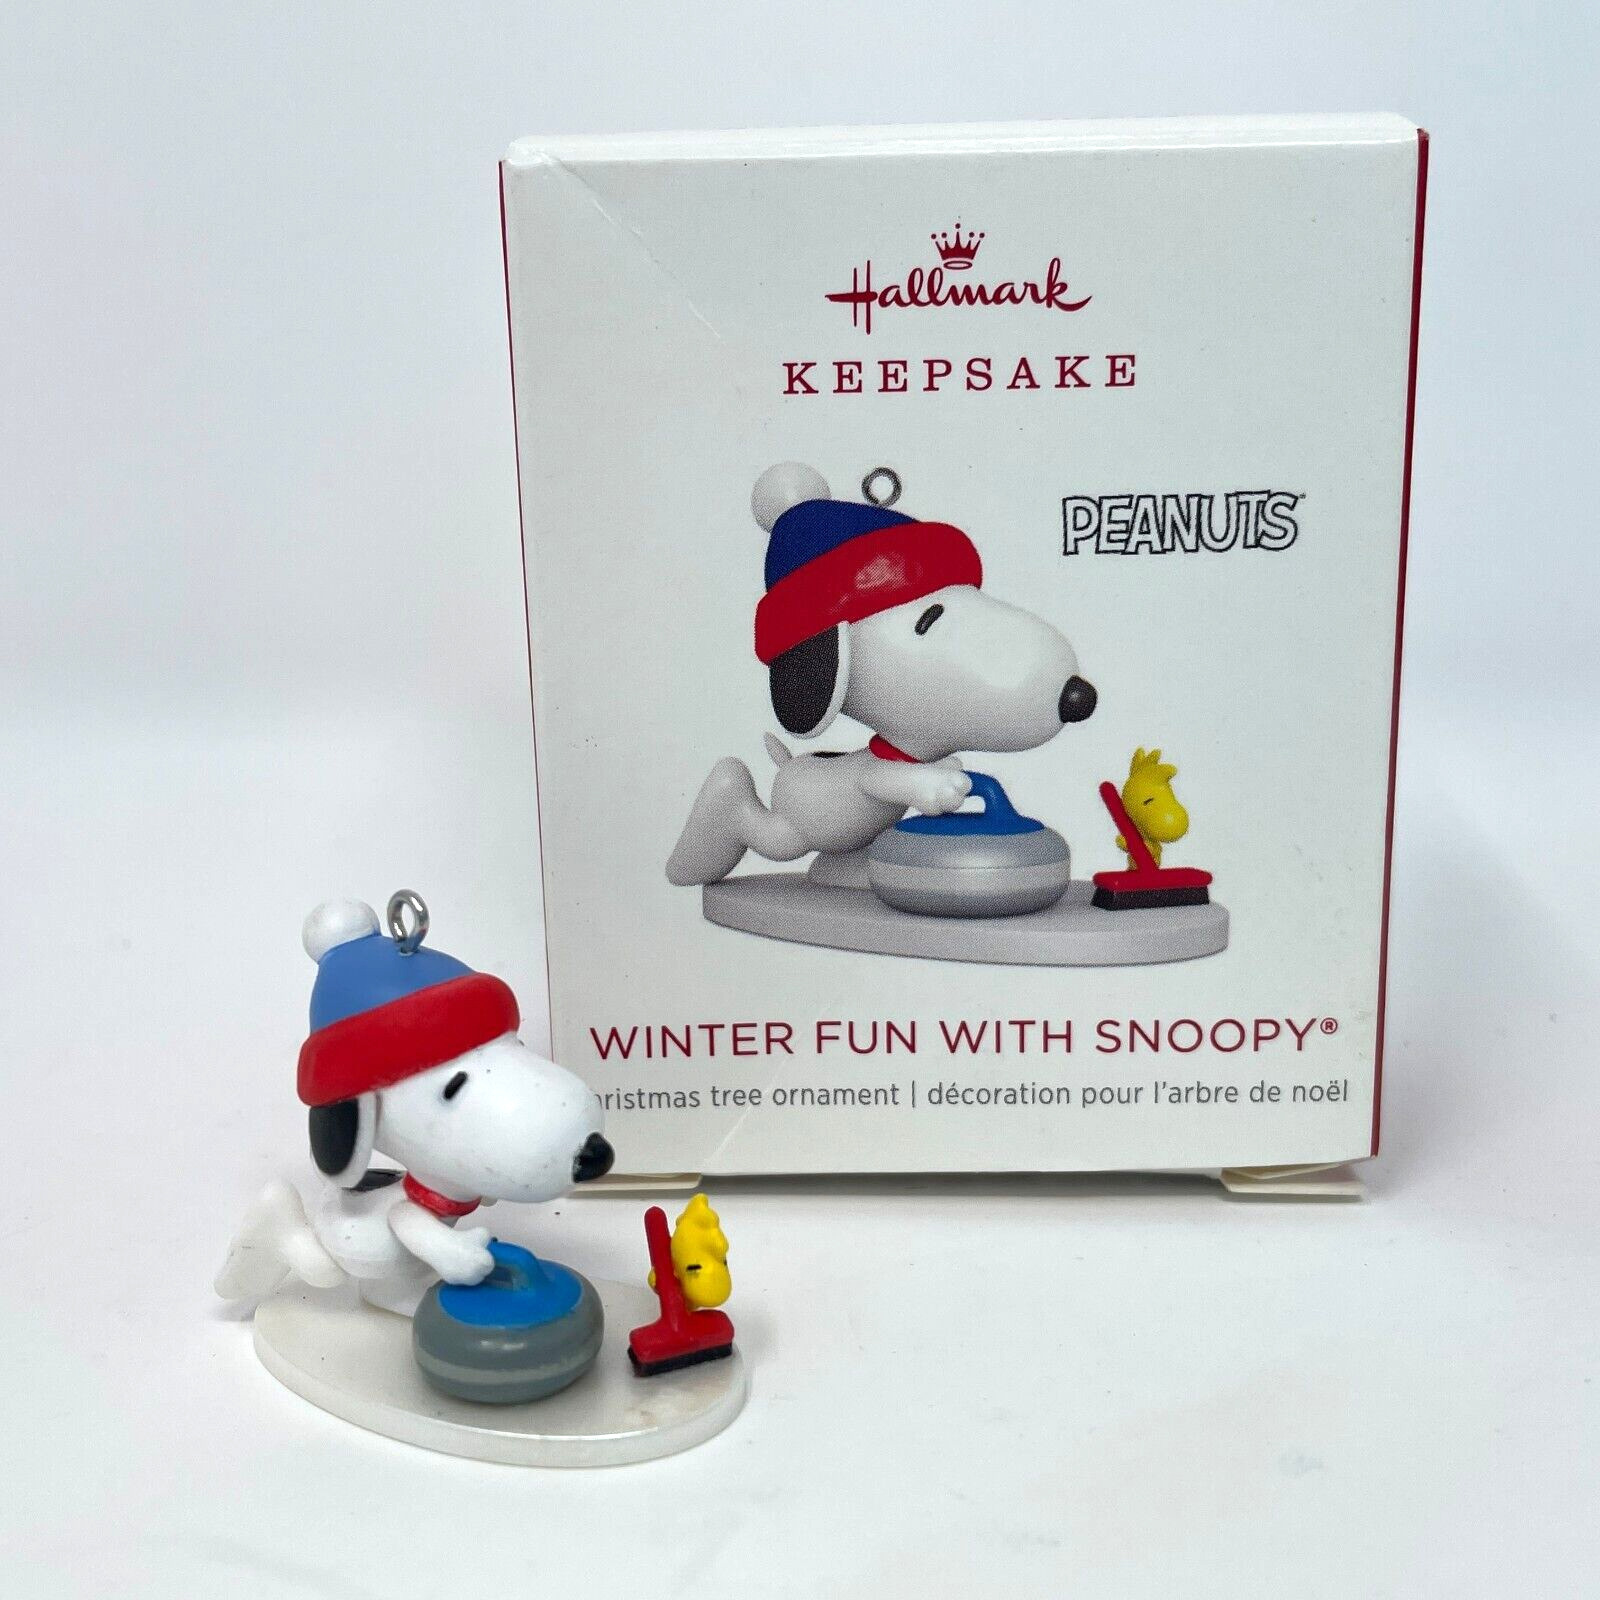 Hallmark Keepsake Peanuts 2018 WINTER FUN WITH SNOOPY Curling Mini Ornament